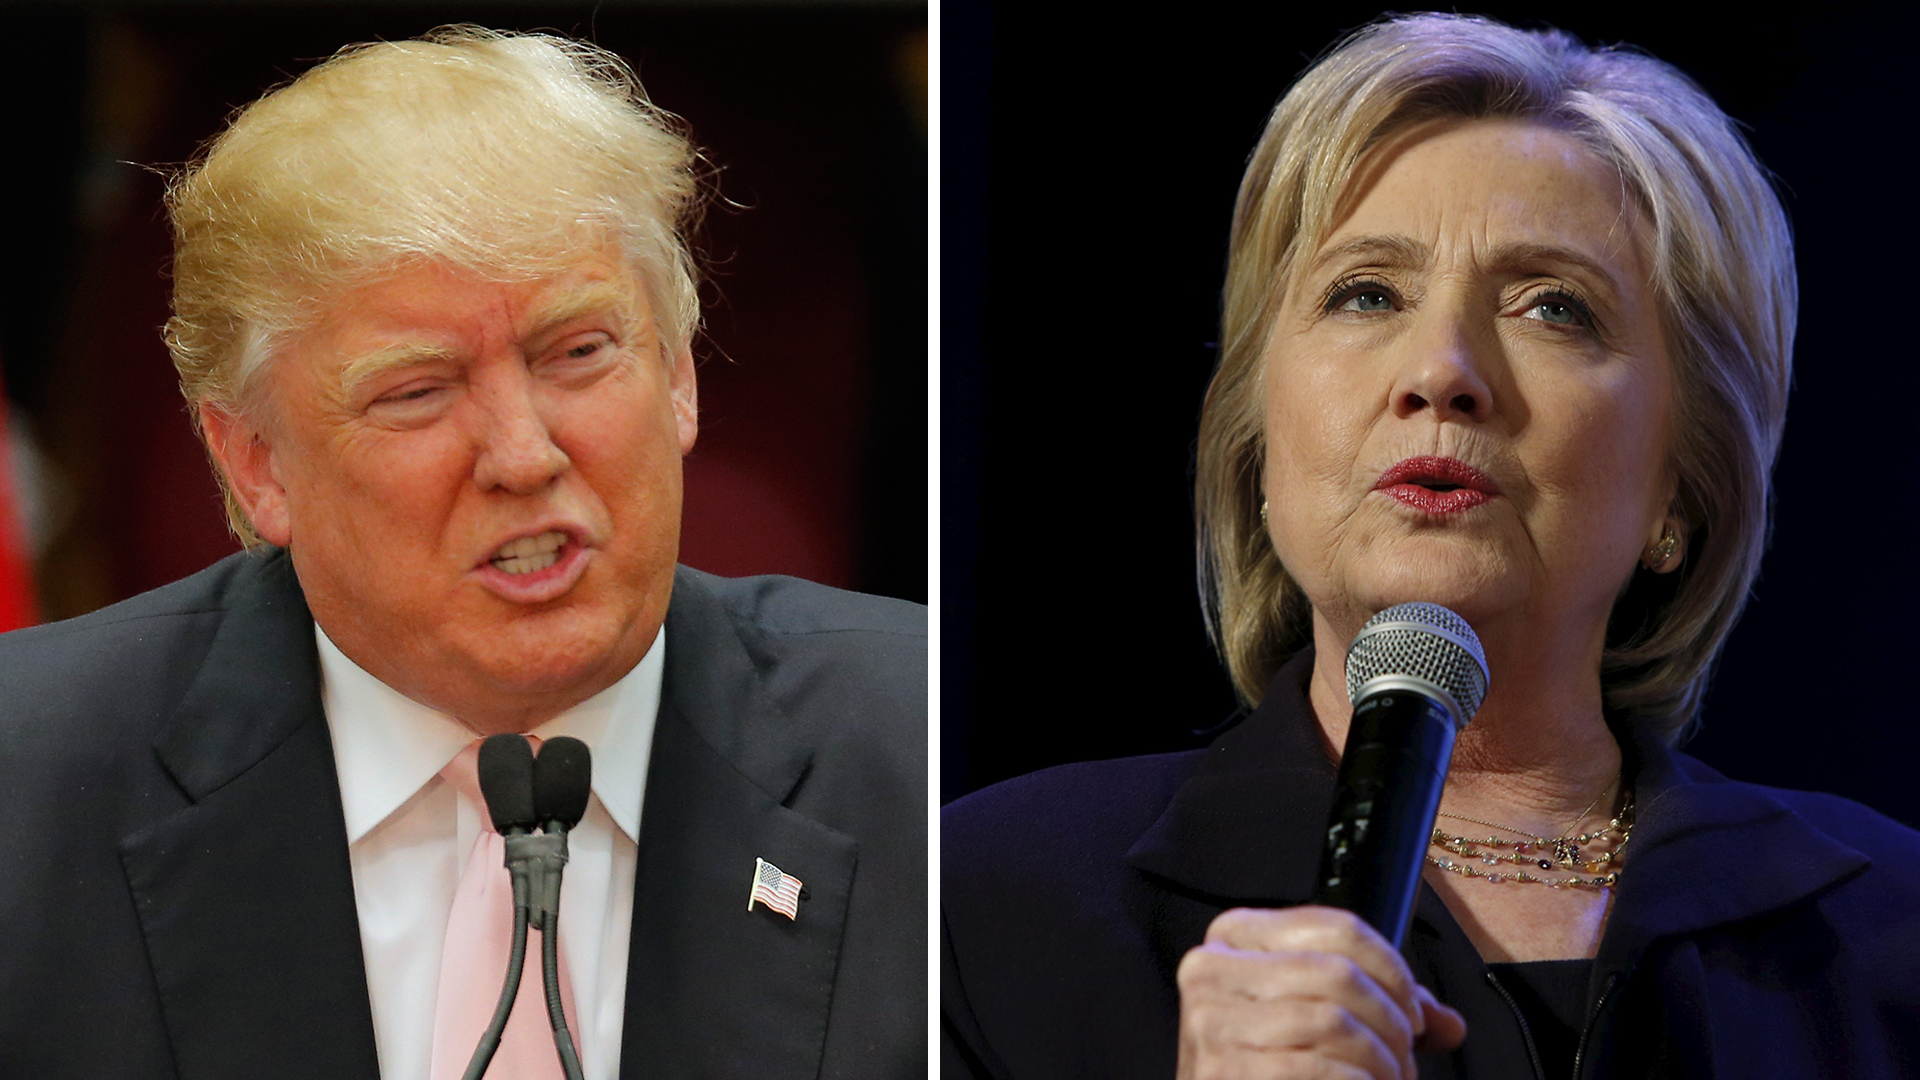 Poll: Donald Trump, Hillary Clinton tied across battleground states - CBS News1920 x 1080